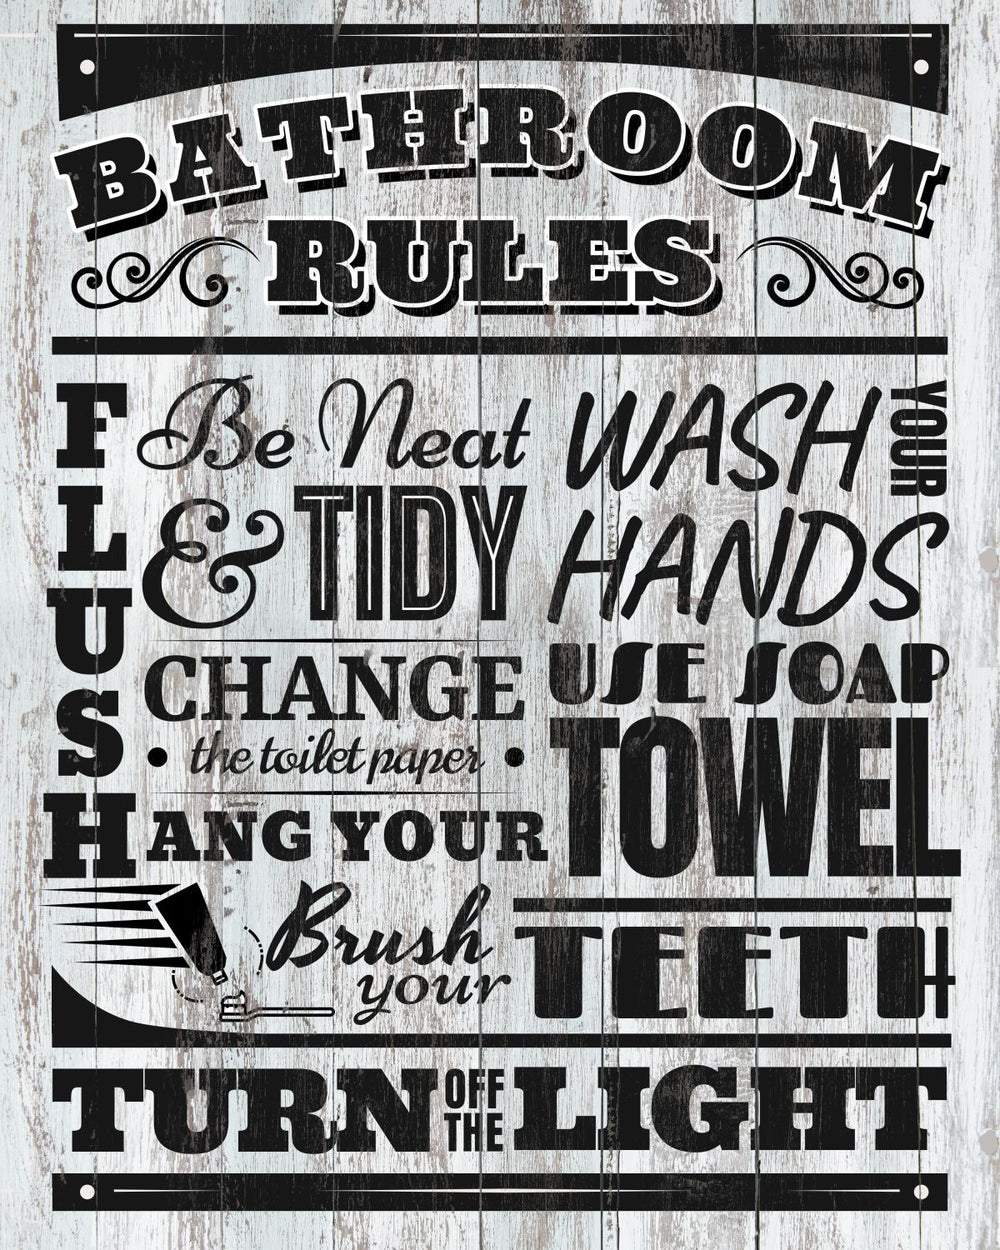 Golden Bathroom Rules